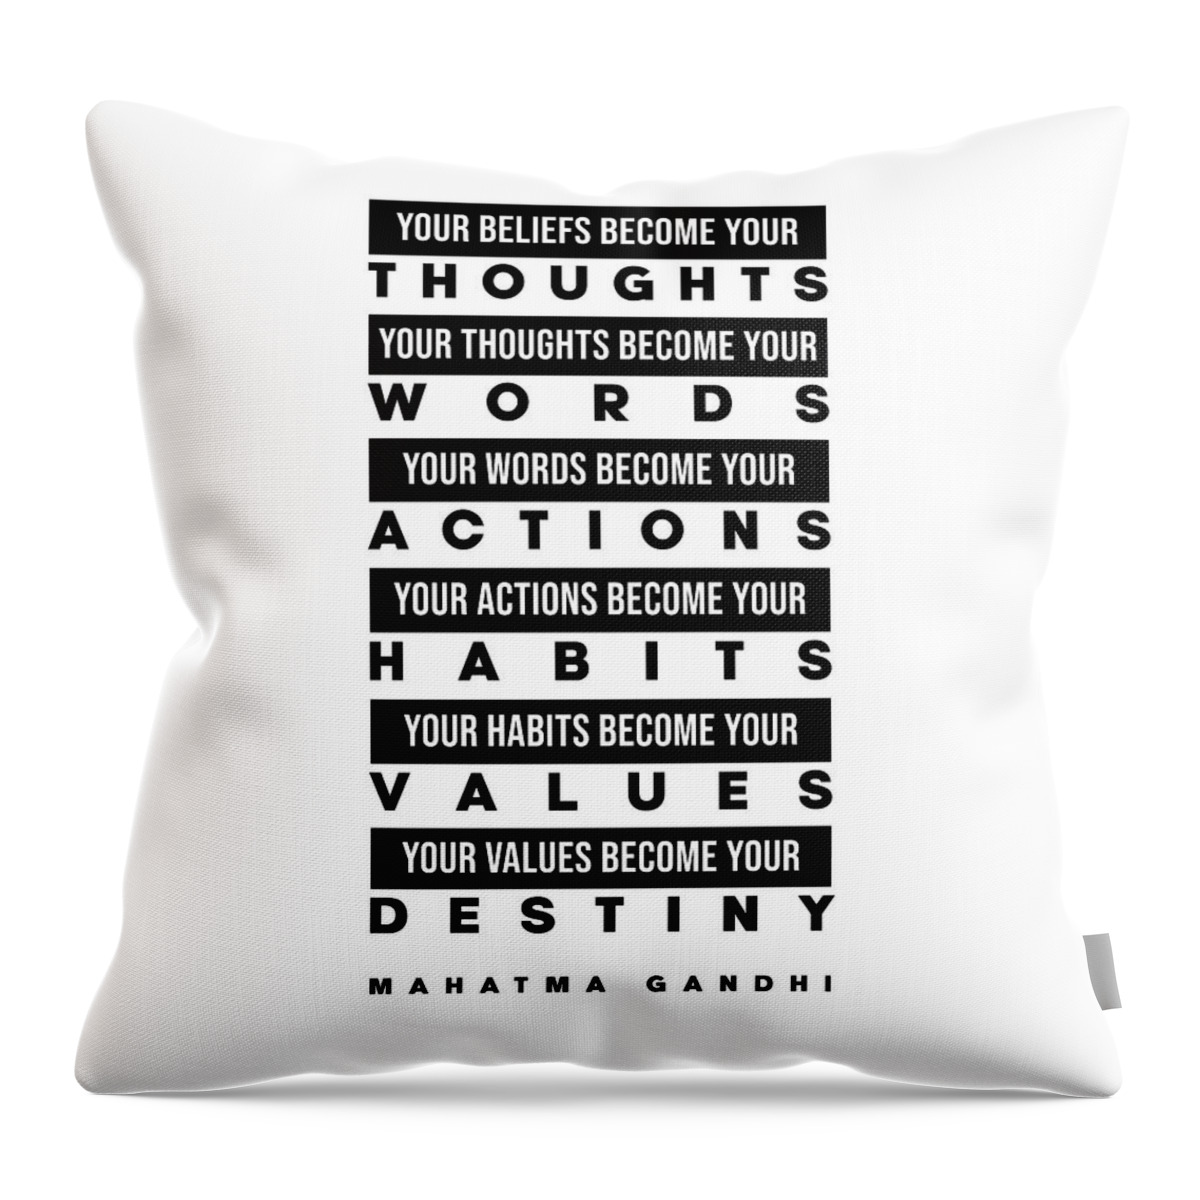 Mahatma Gandhi Throw Pillow featuring the digital art Mahatma Gandhi Quote - Your Beliefs become your thoughts 2 - Minimal, Typography Print - Inspiring by Studio Grafiikka